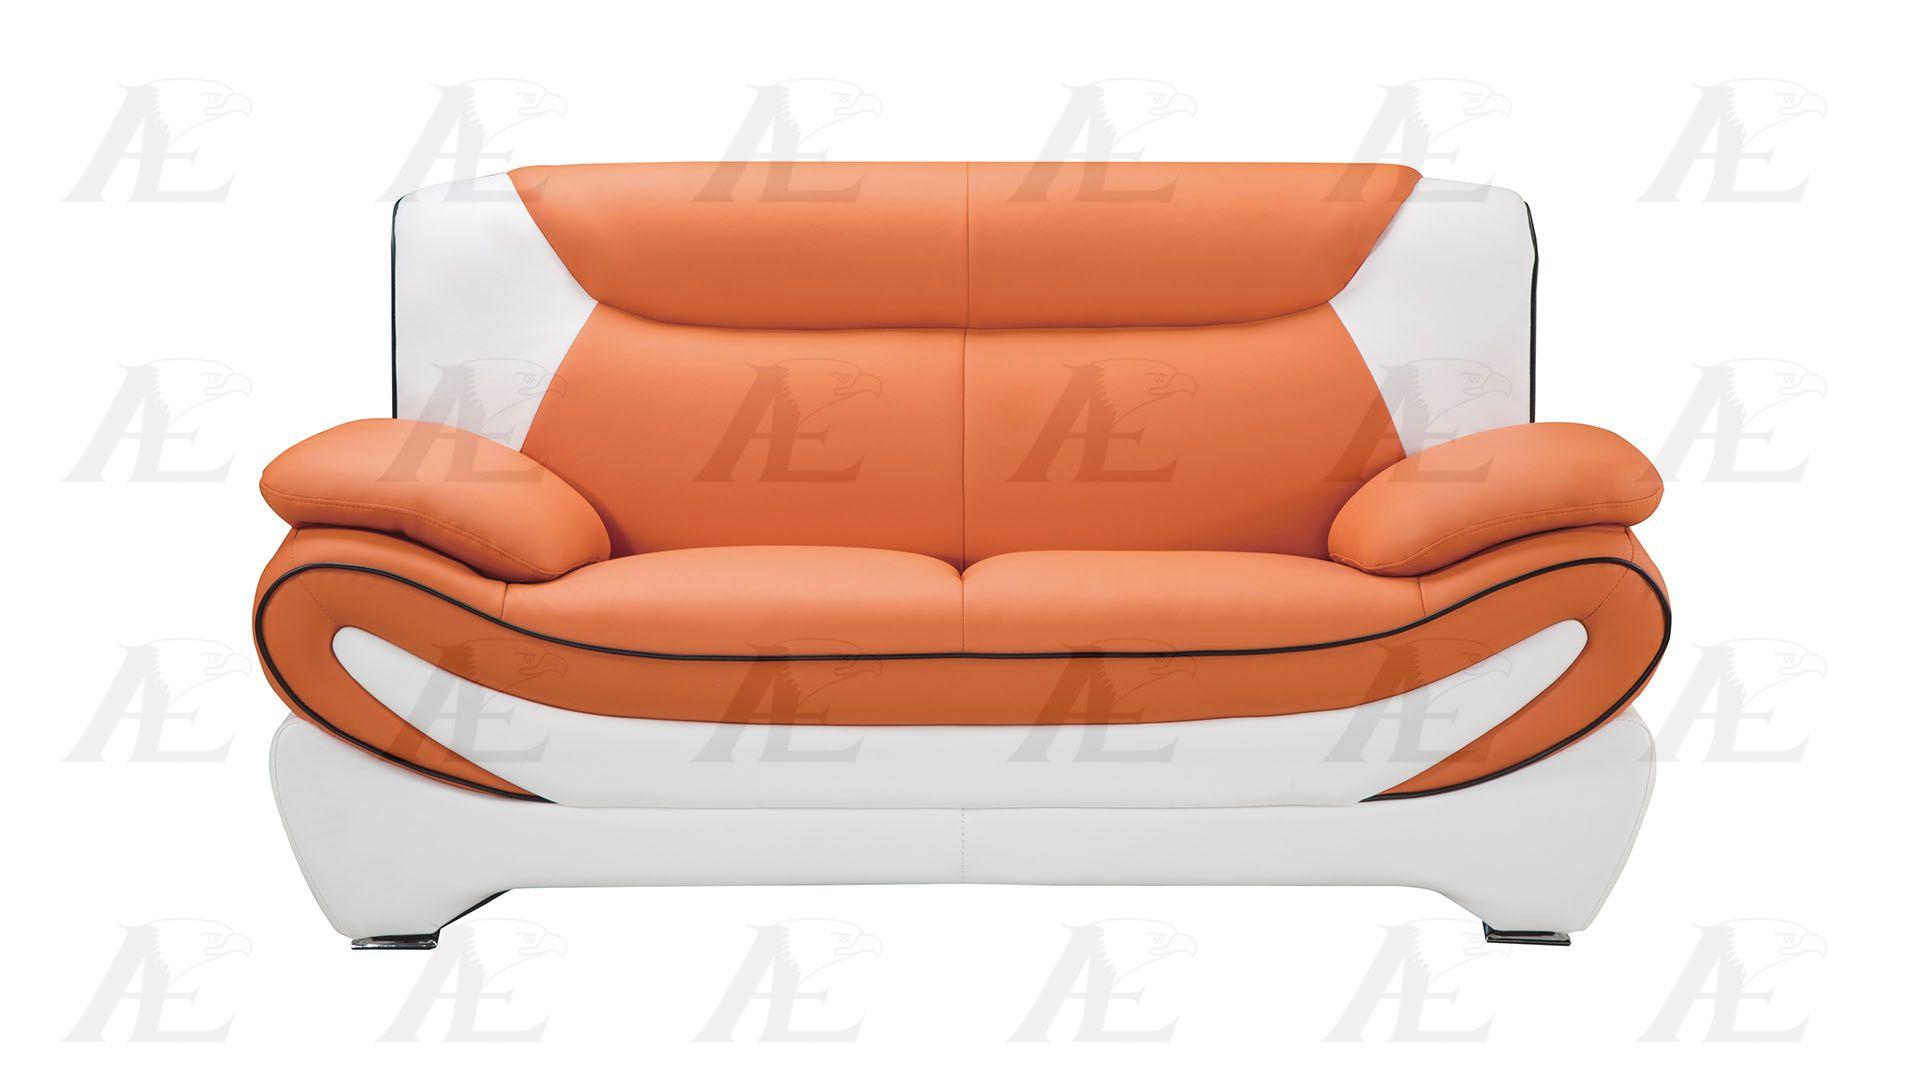 

                    
American Eagle Furniture AE209-ORG.IV Sofa and Loveseat Set Orange/White Bonded Leather Purchase 
